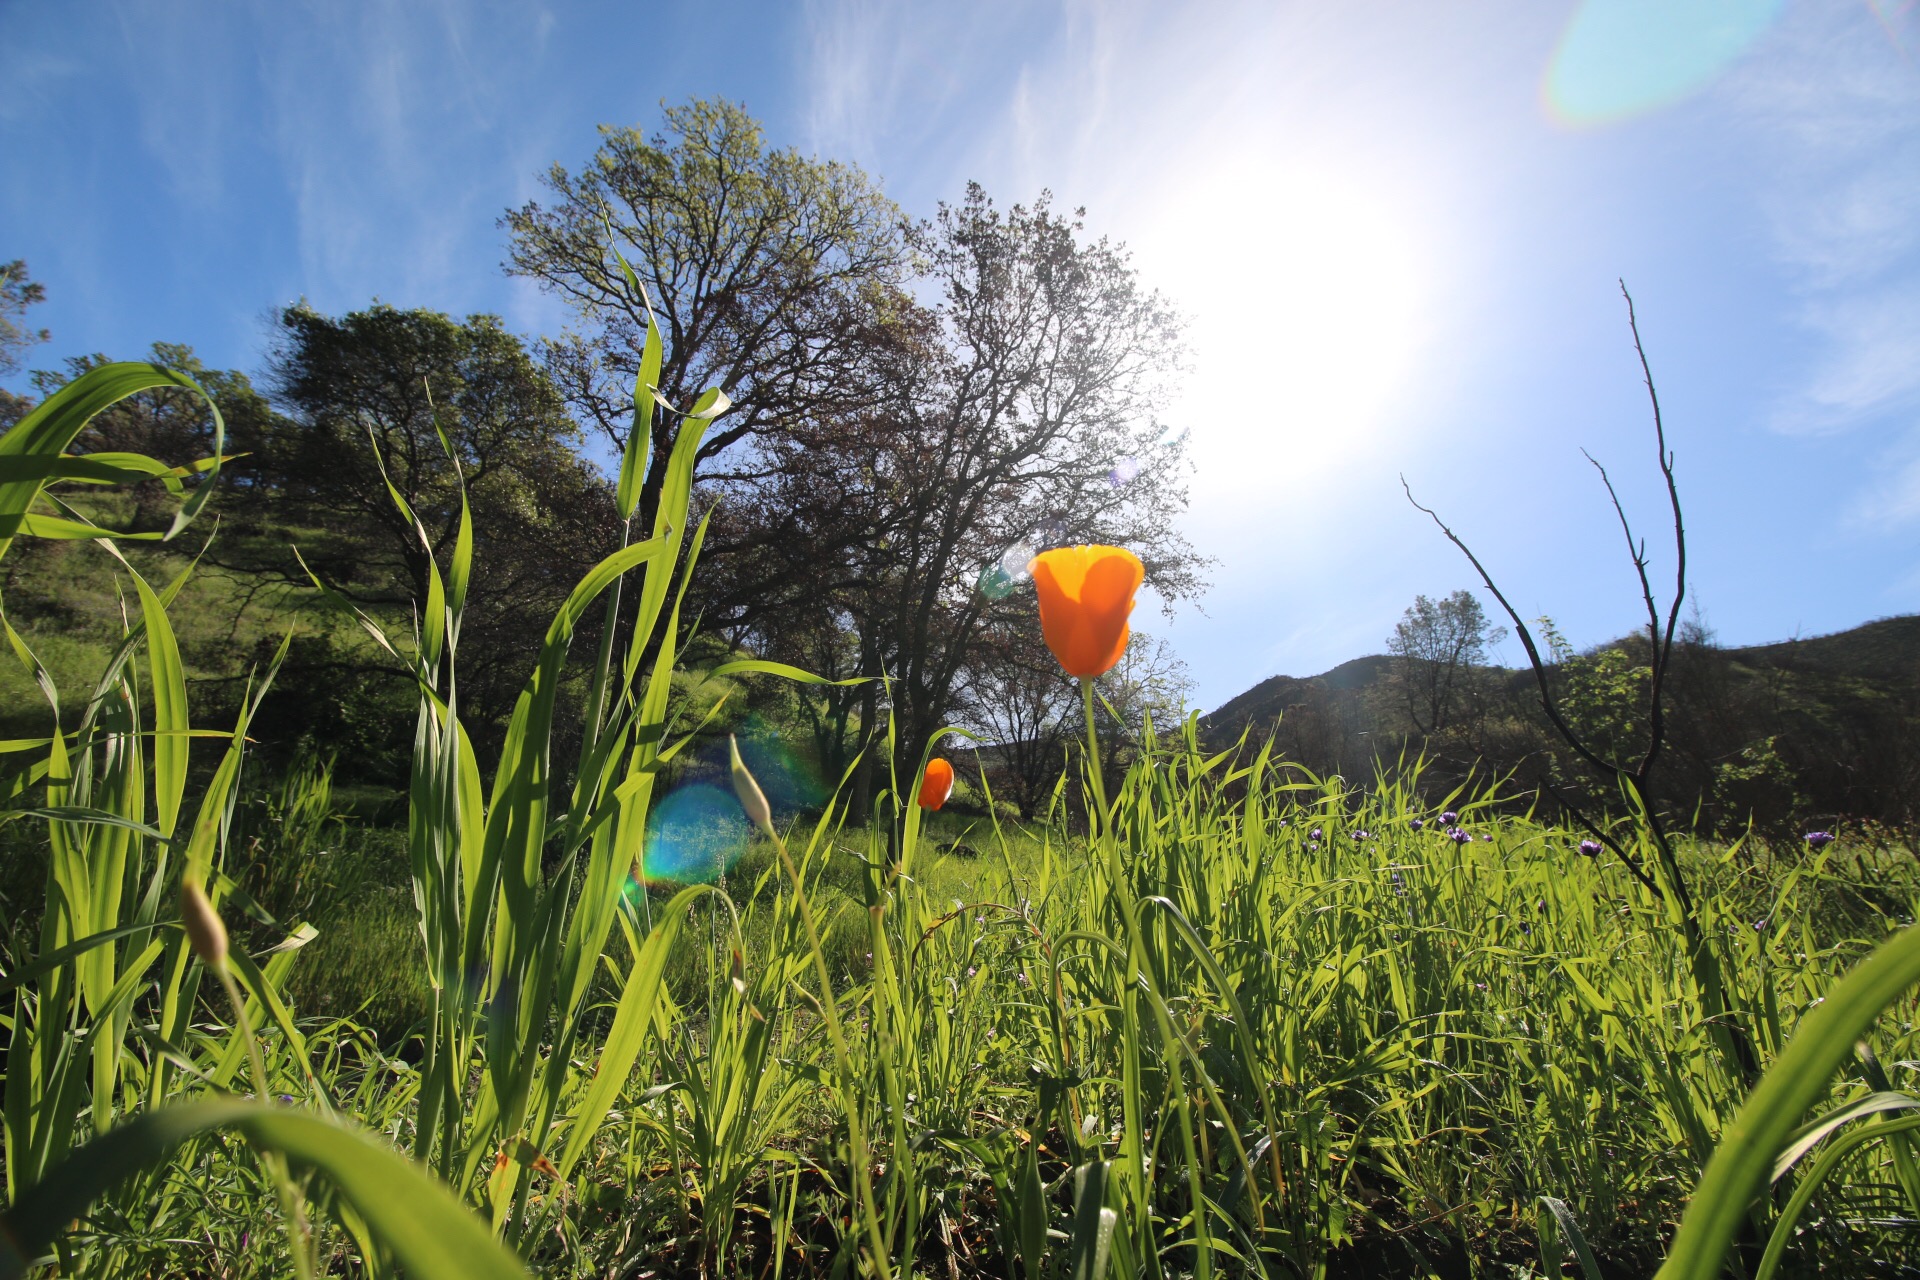 California poppy in grassland and oak trees